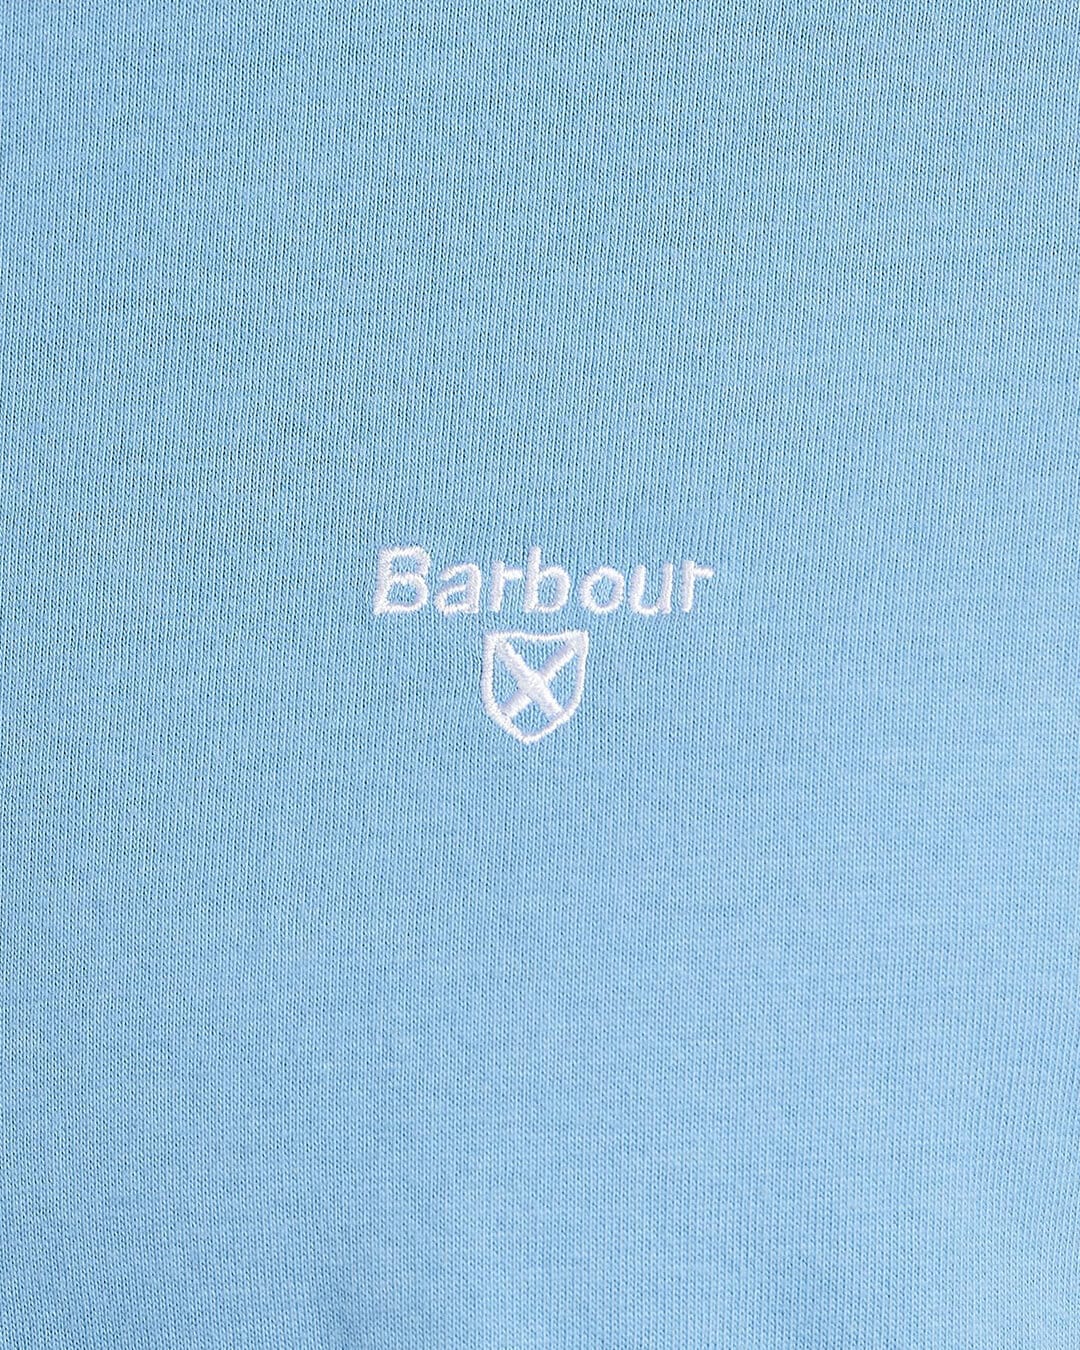 Barbour T-Shirts Barbour Blue Essential Sports T-Shirt